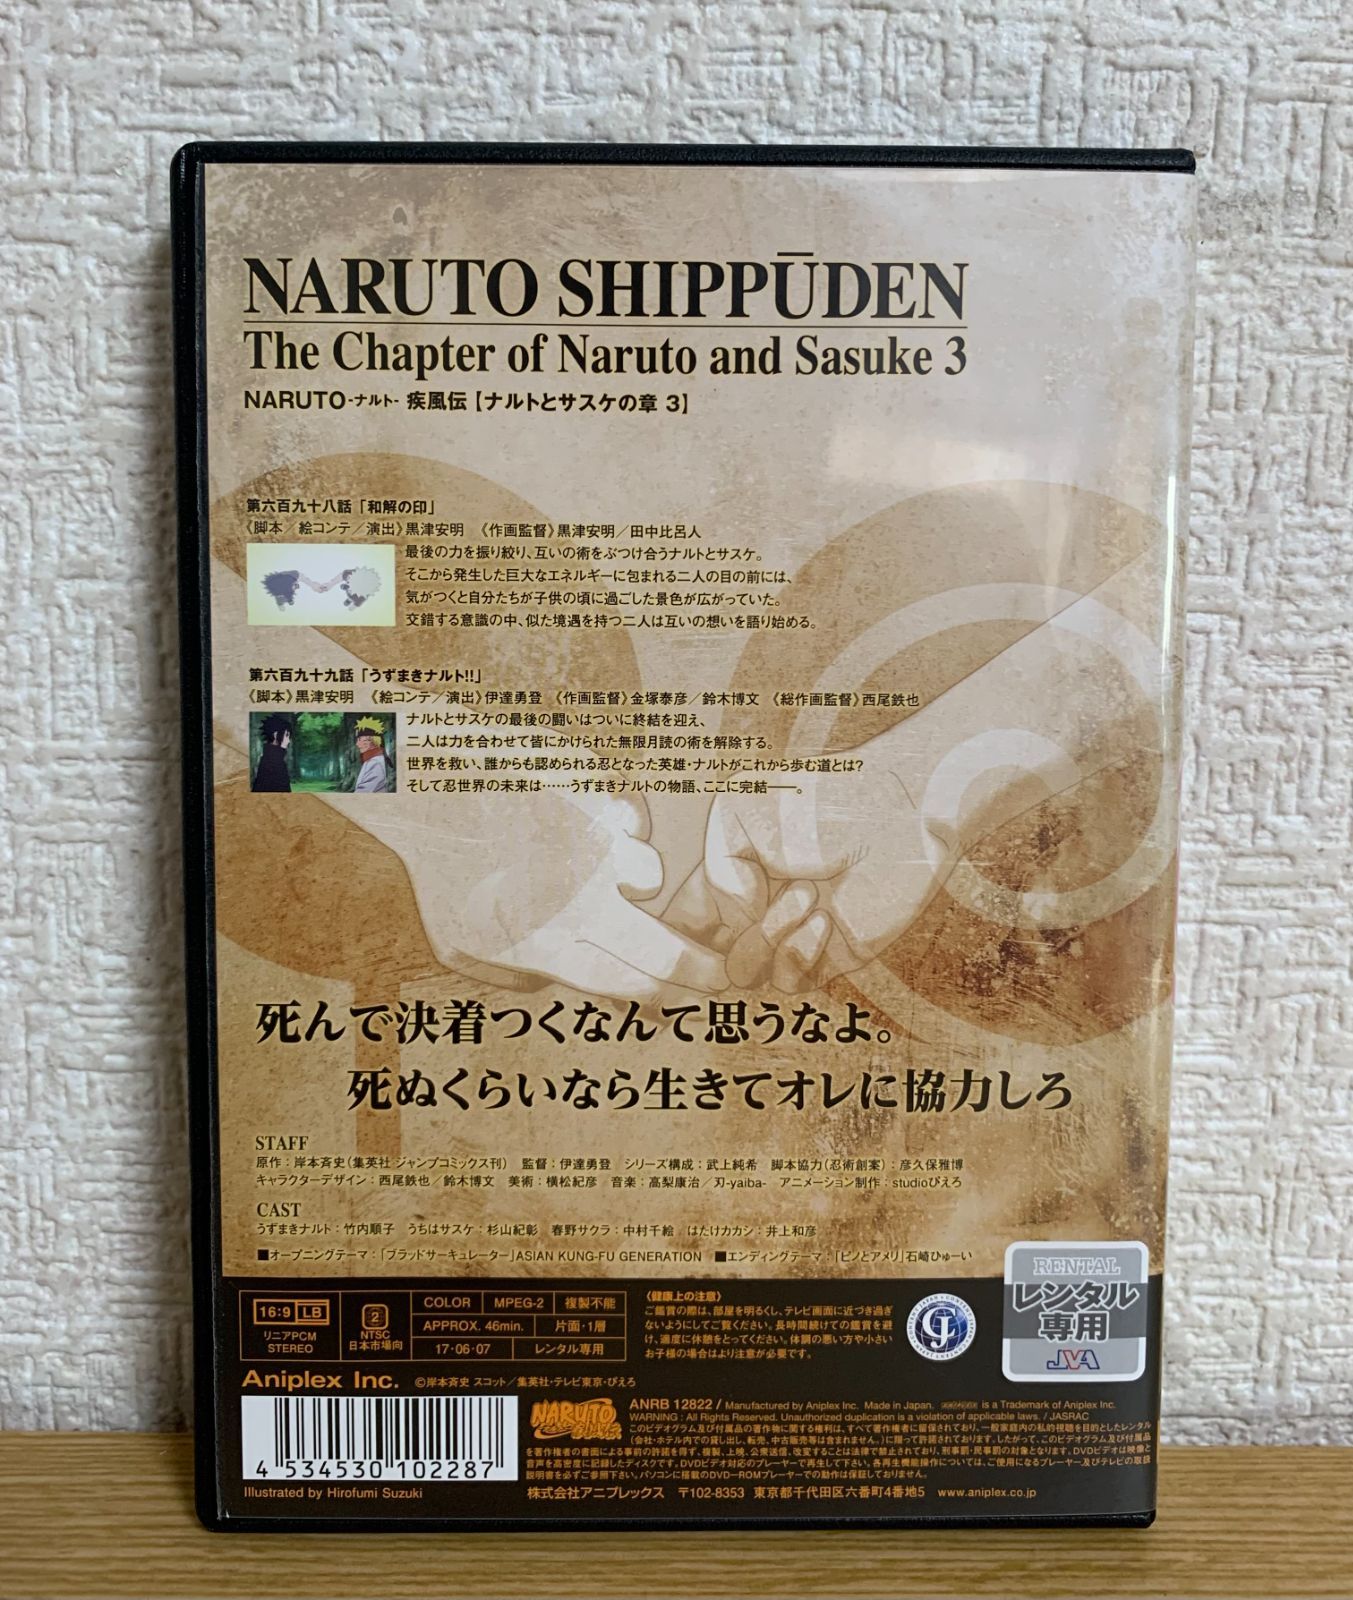 NARUTO-ナルト-疾風伝 ナルトとサスケの章-